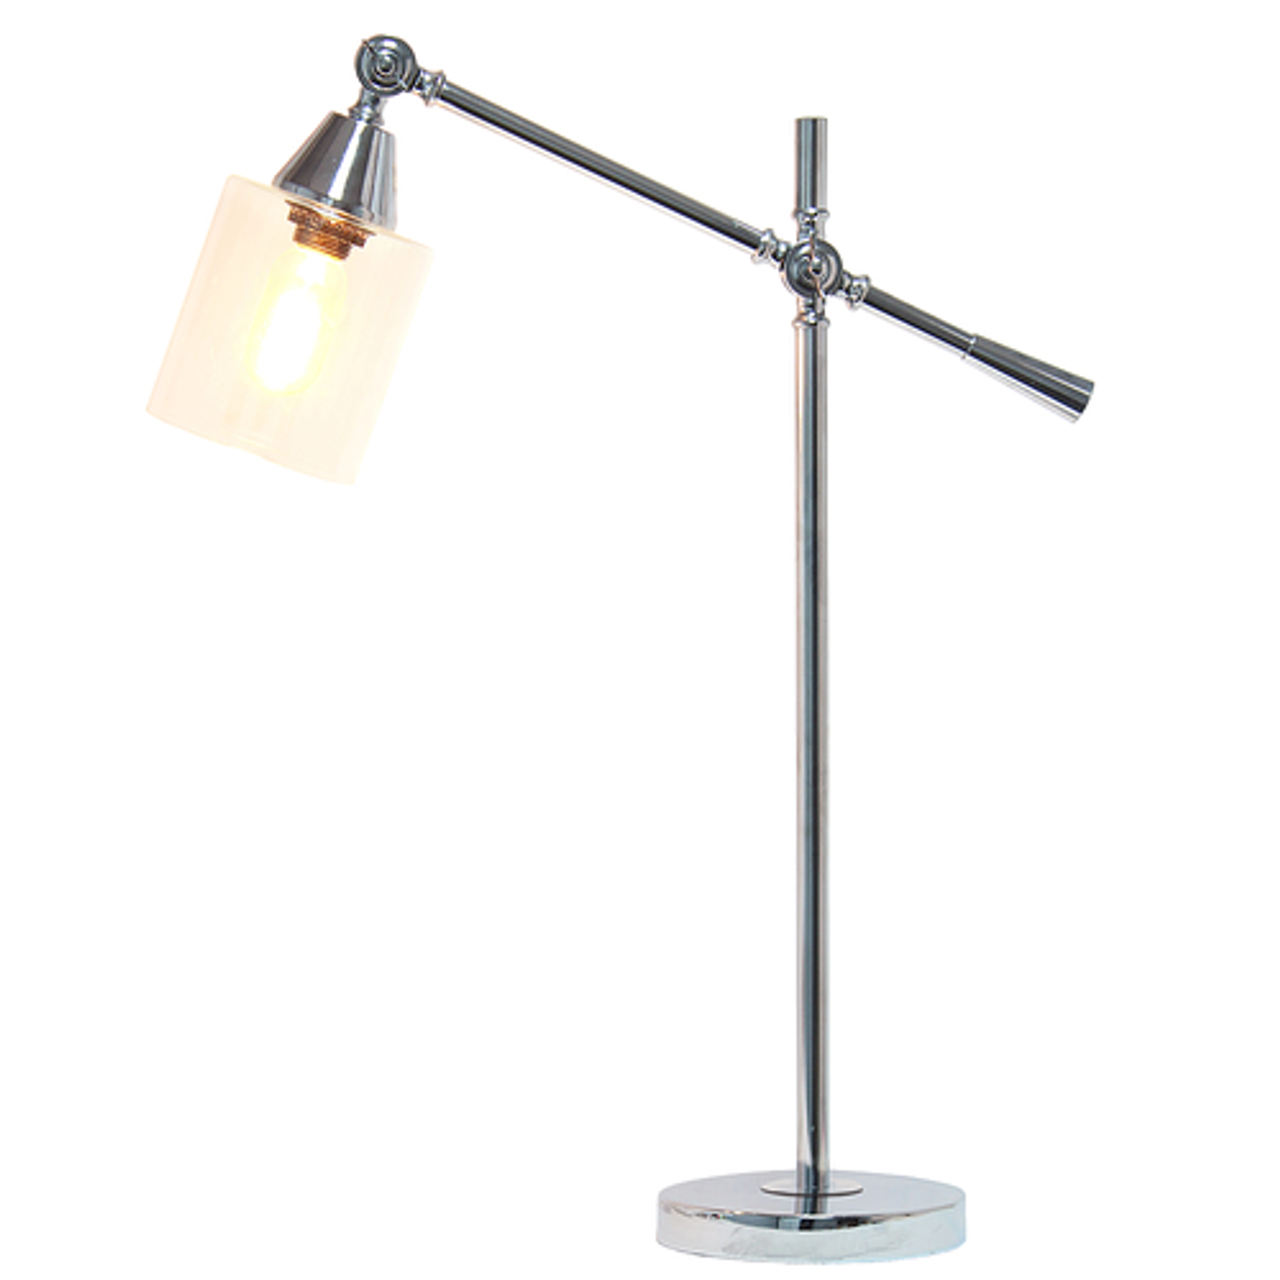 Lalia Home Vertically Adjustable Desk Lamp - Chrome